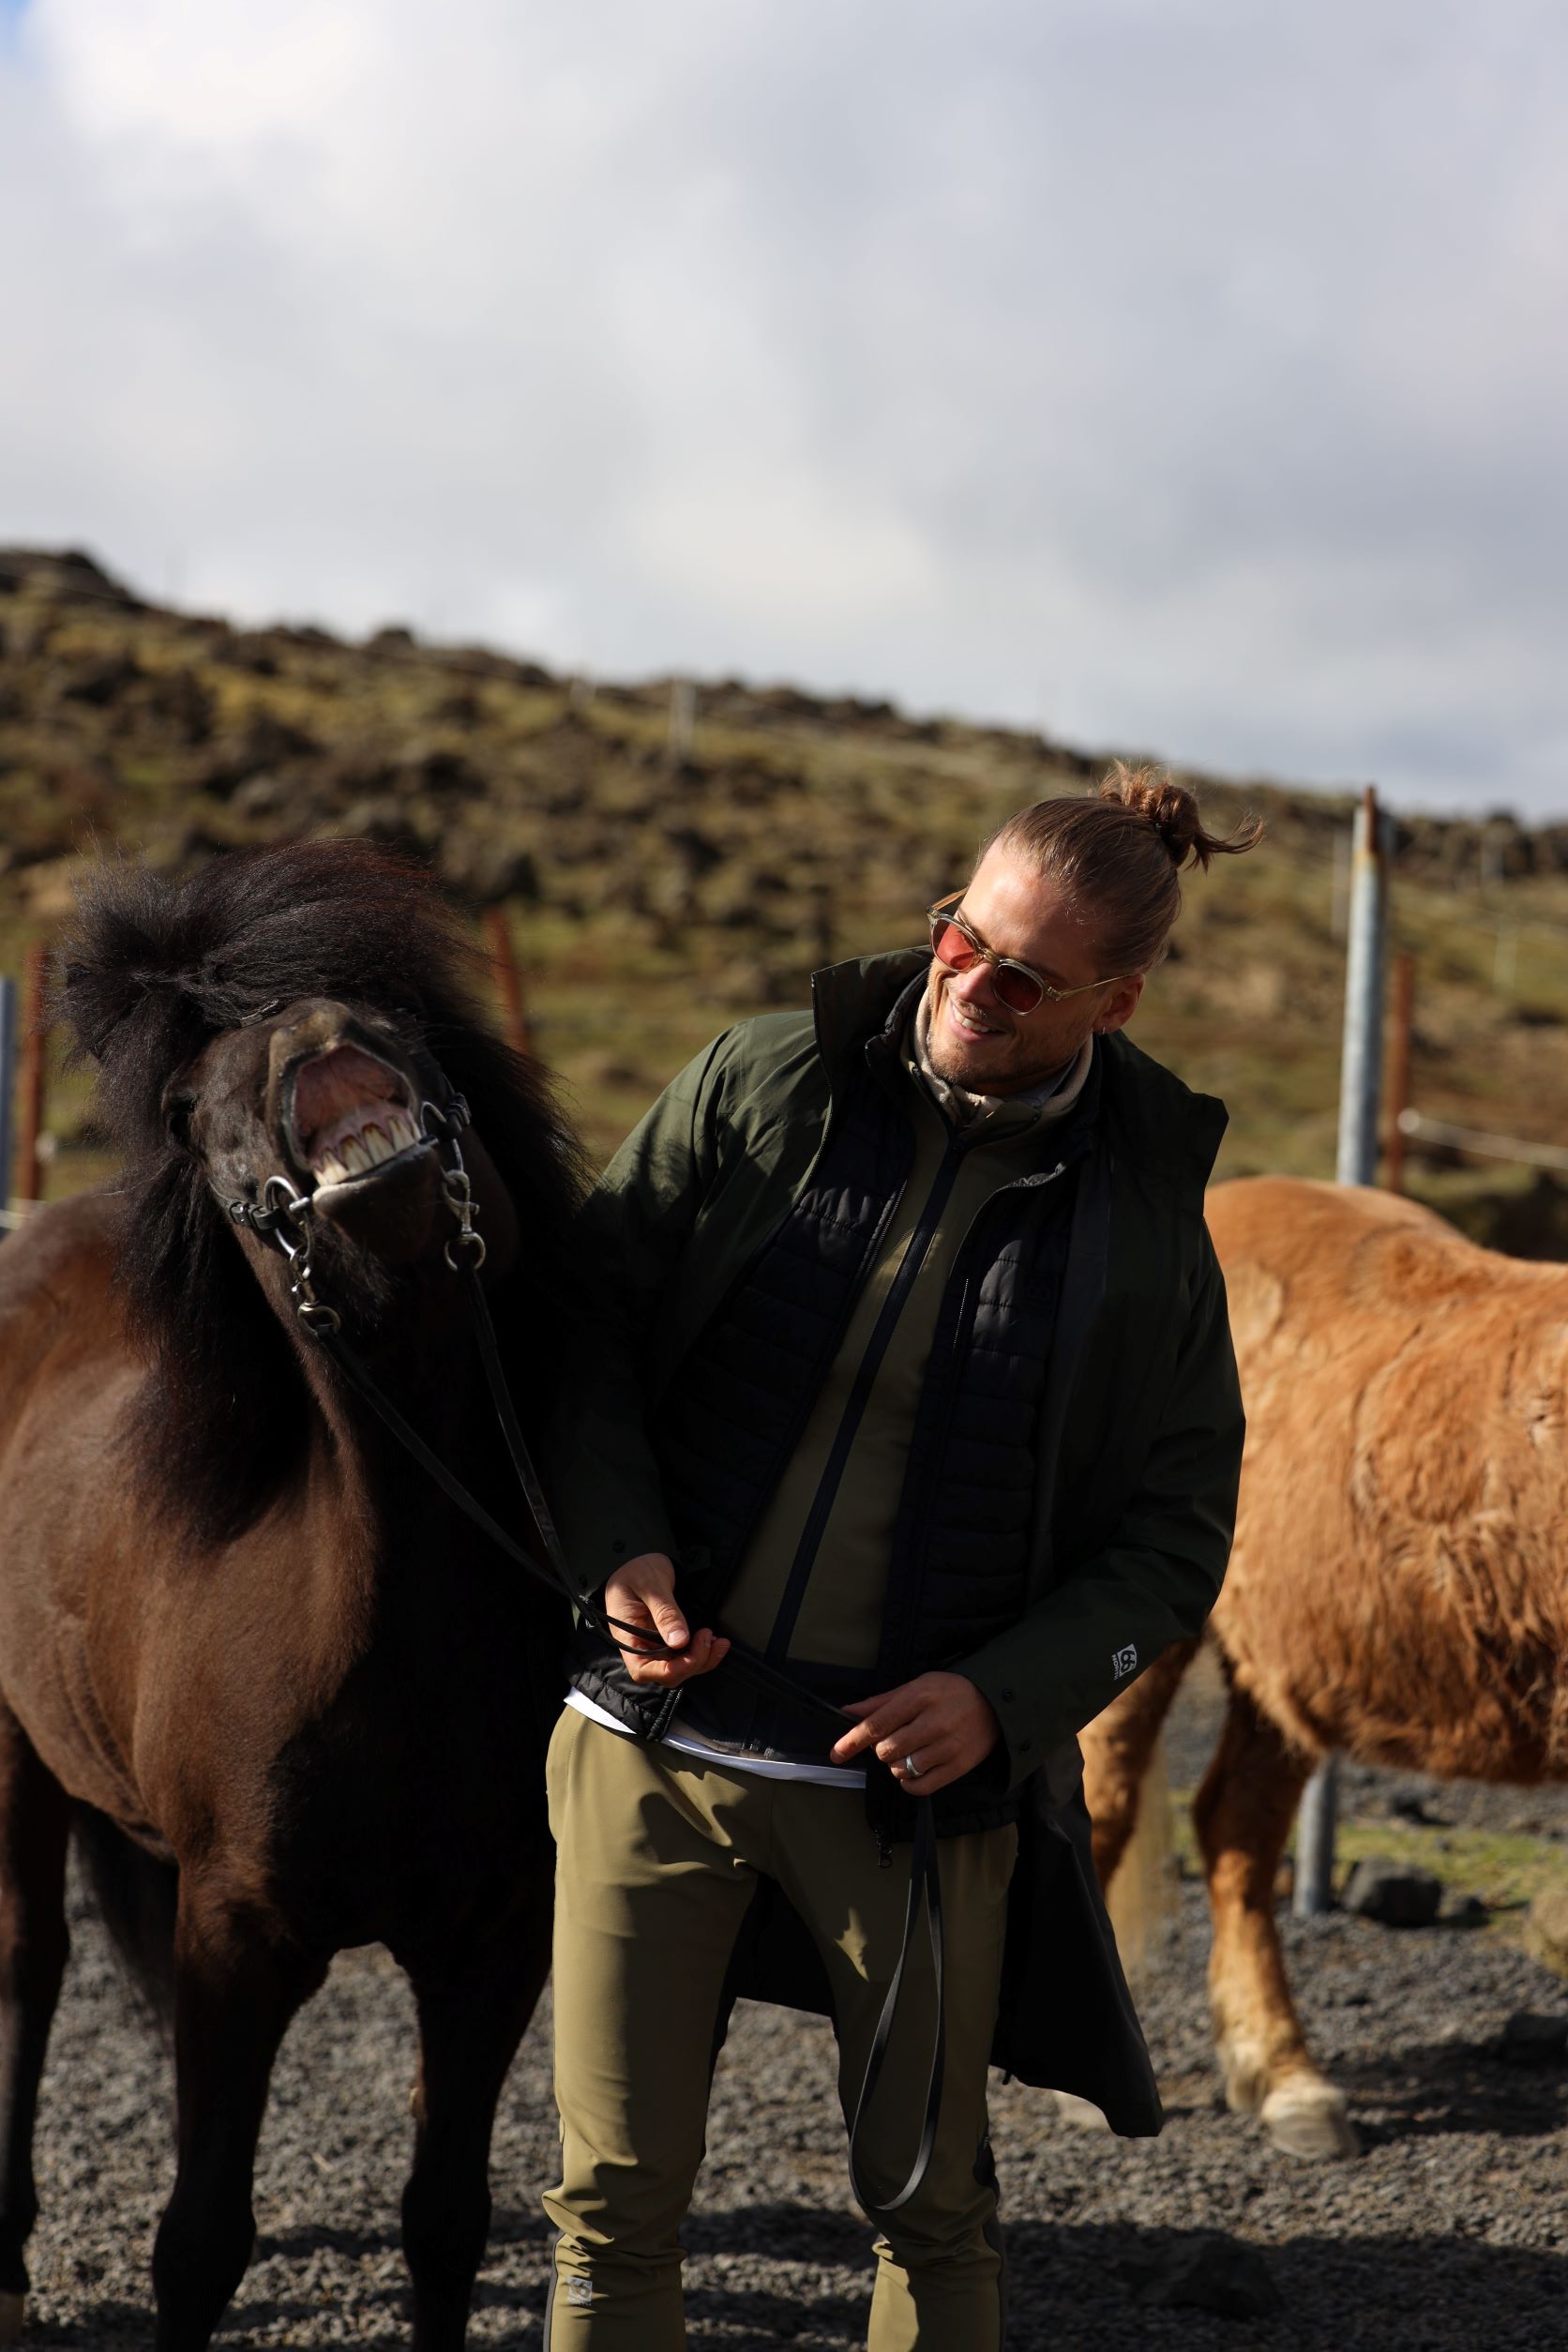 Rurik Gislason stands next to a black horse